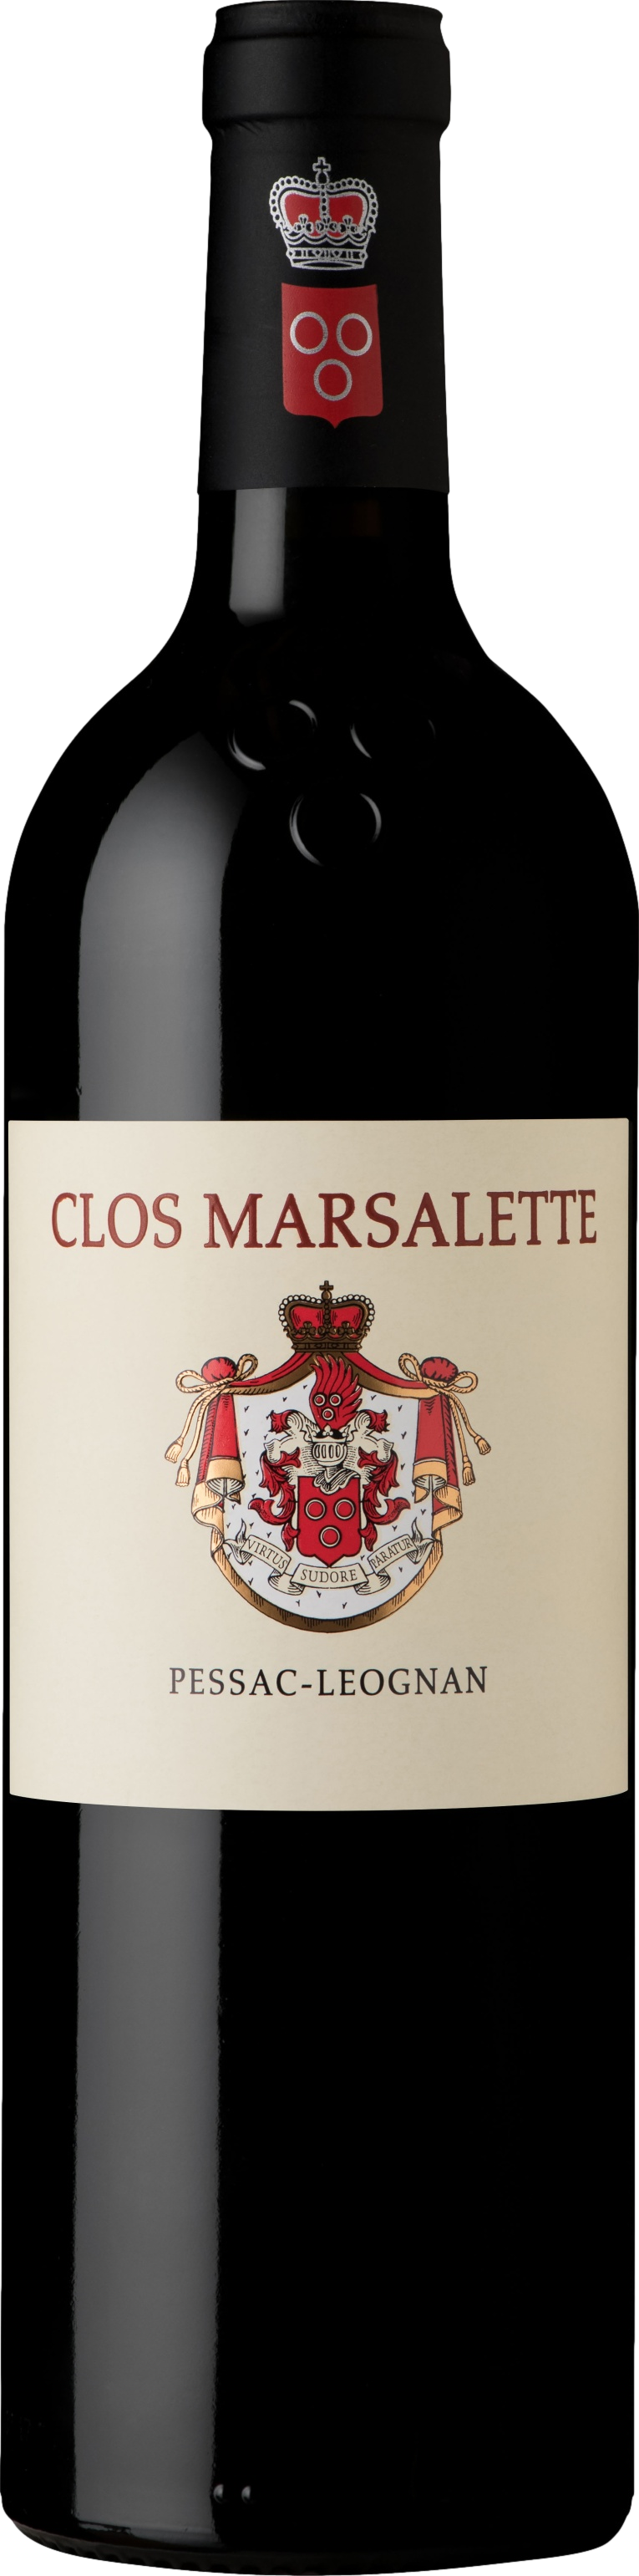 Chateau Clos Marsalette Pessac-Leognan 2017 Chateau Clos Marsalette 8wines DACH